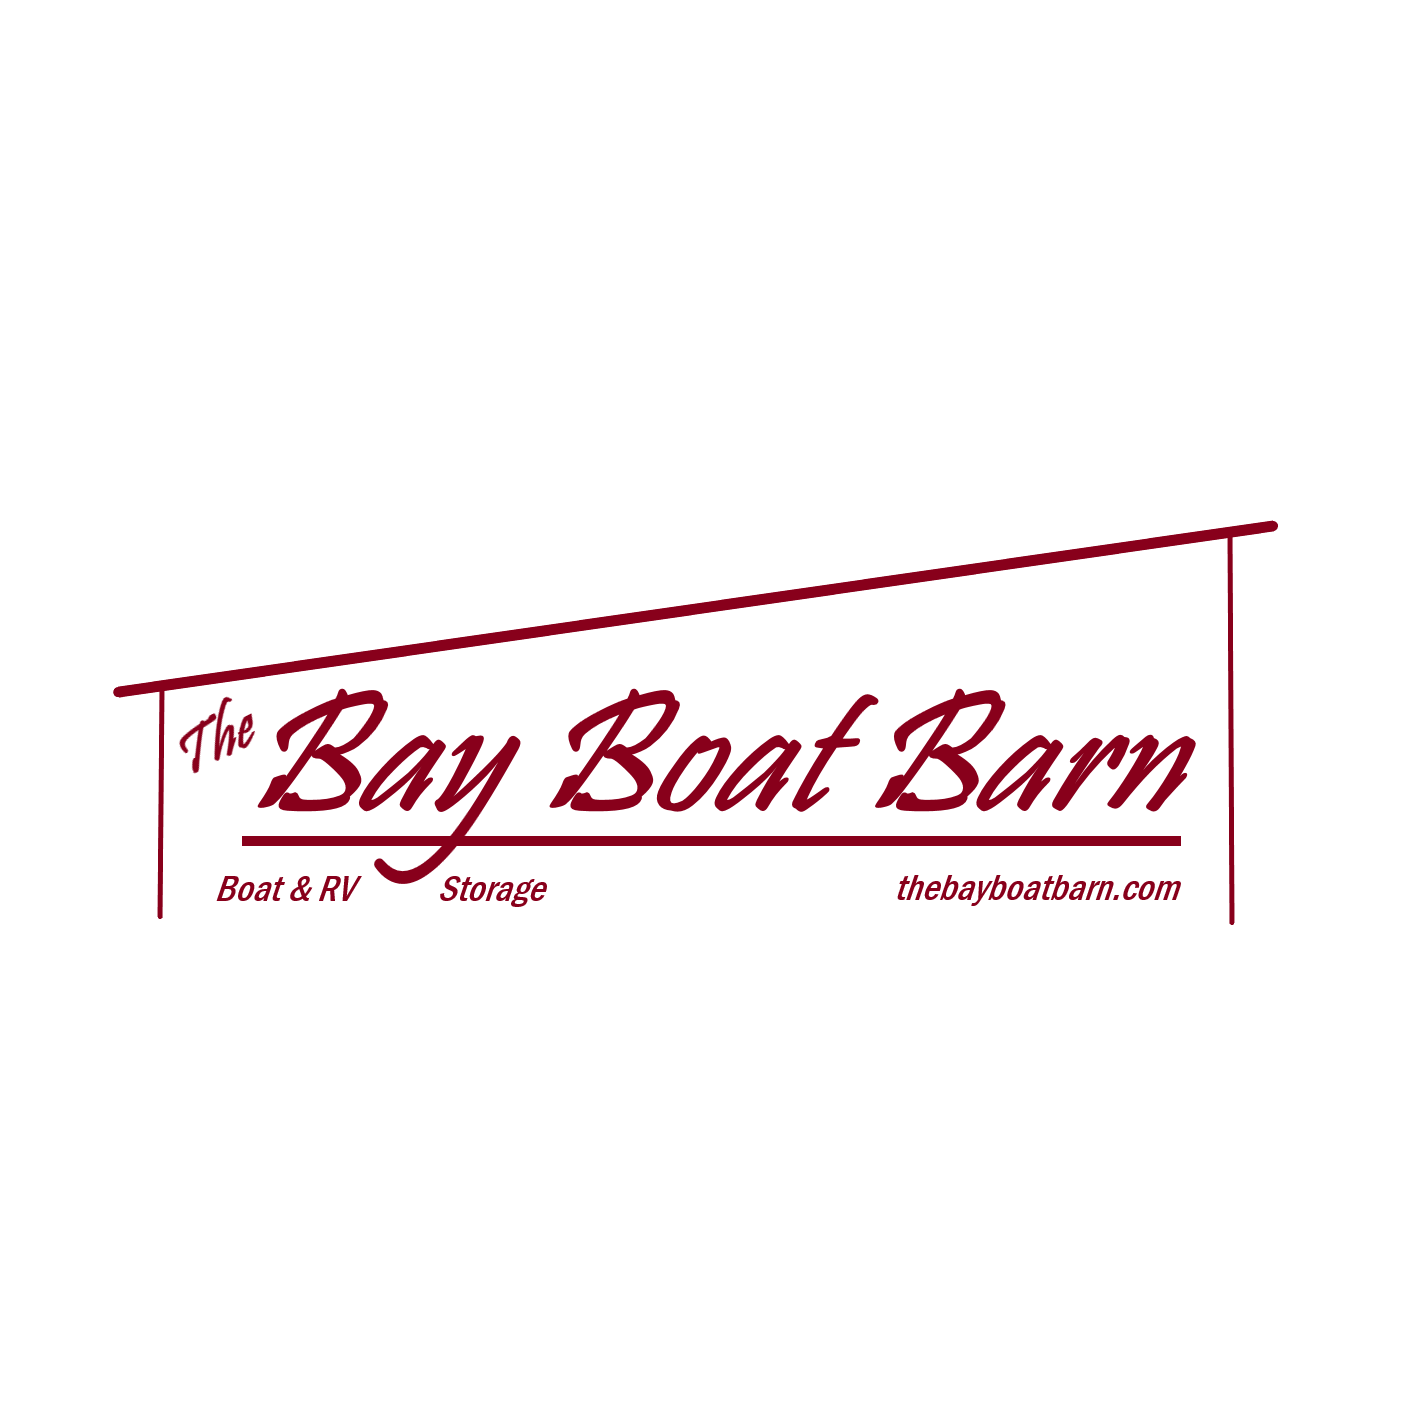 The Bay Boat Barn